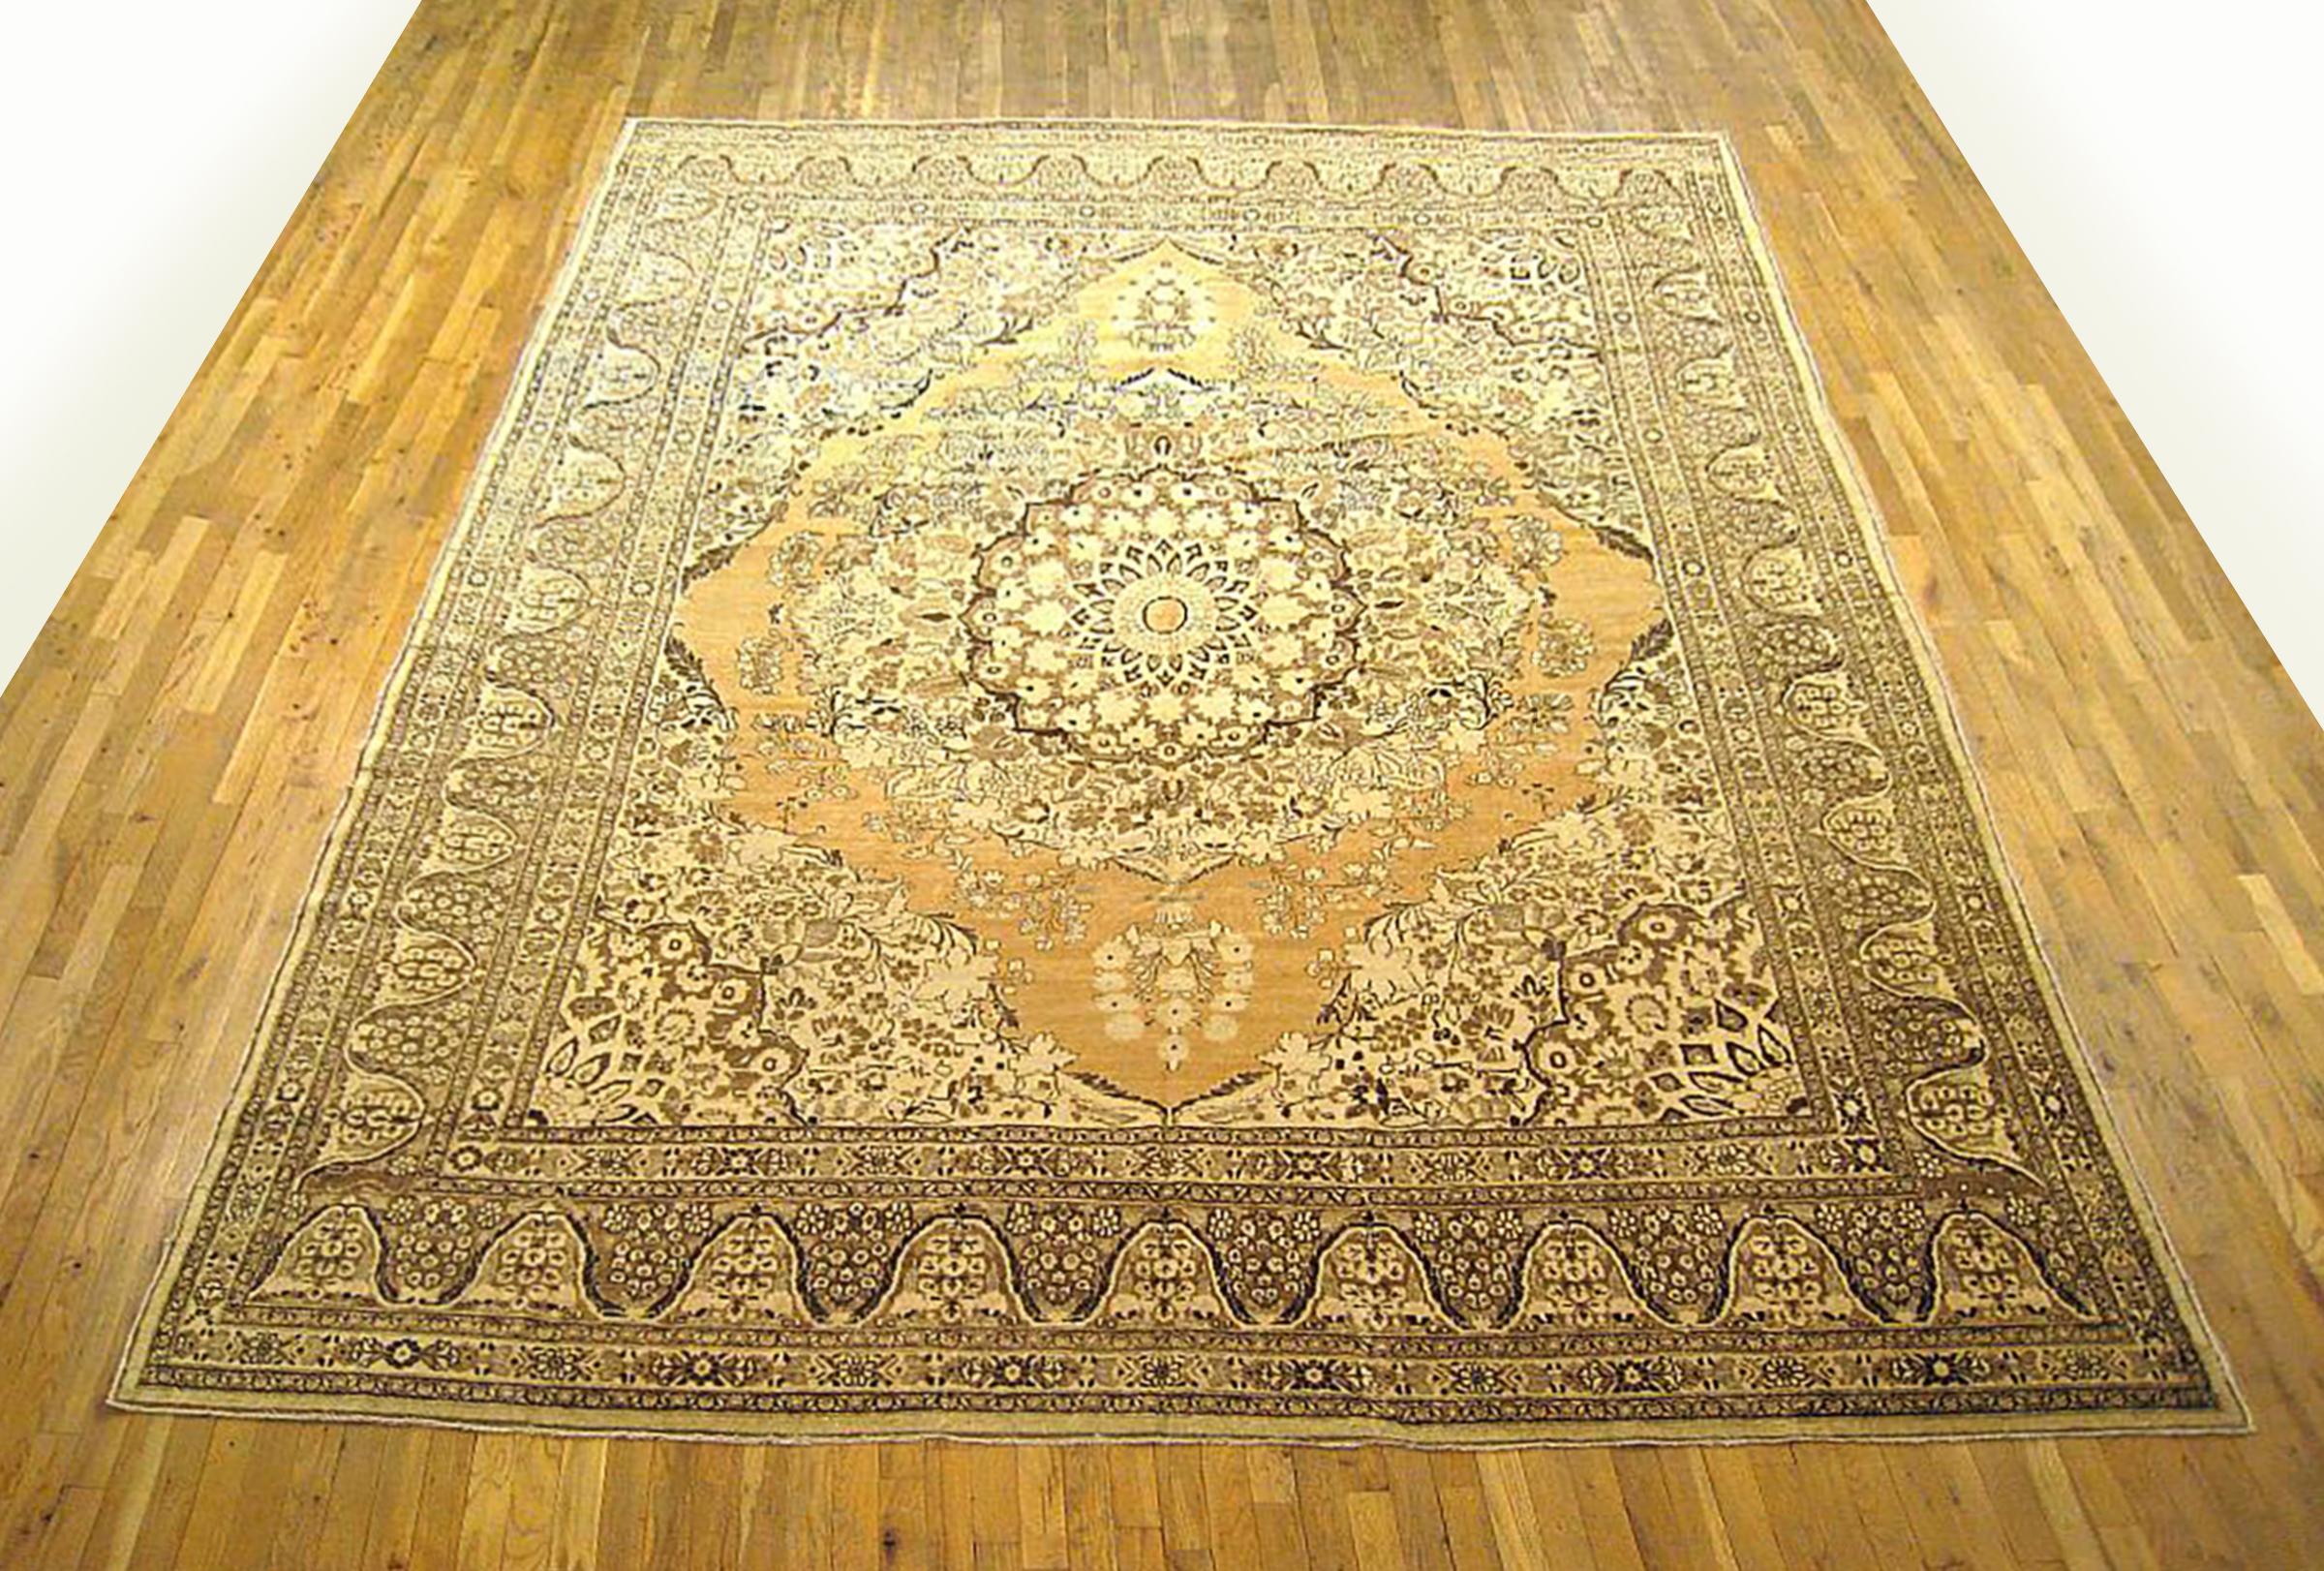 Antique Perisan Tabriz oriental carpet, circa 1900, room sized.

An antique Persian Tabriz oriental carpet, circa 1900. Size: 13'0